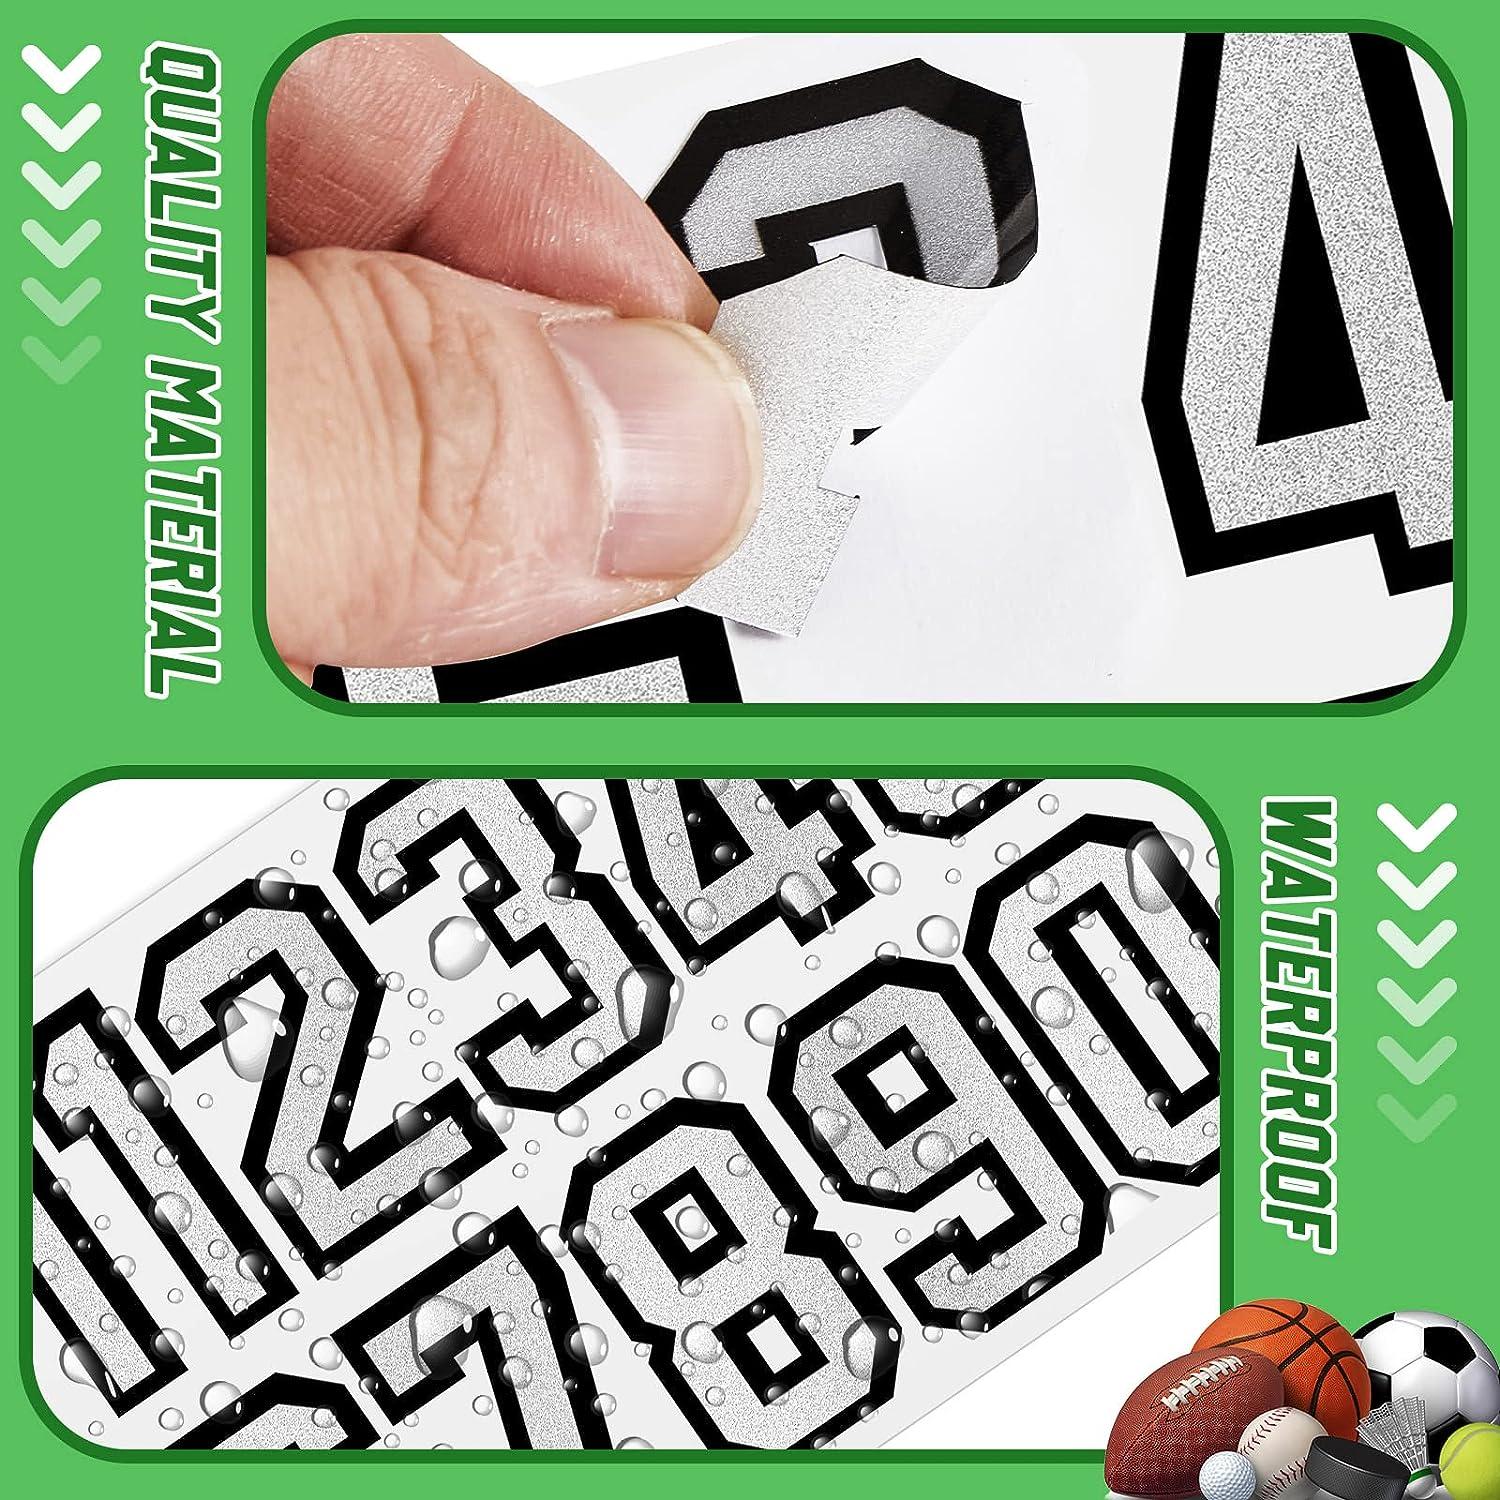 1 Inch Self Adhesive Waterproof Vinyl Letter Number Stickers 8 Sheet Red